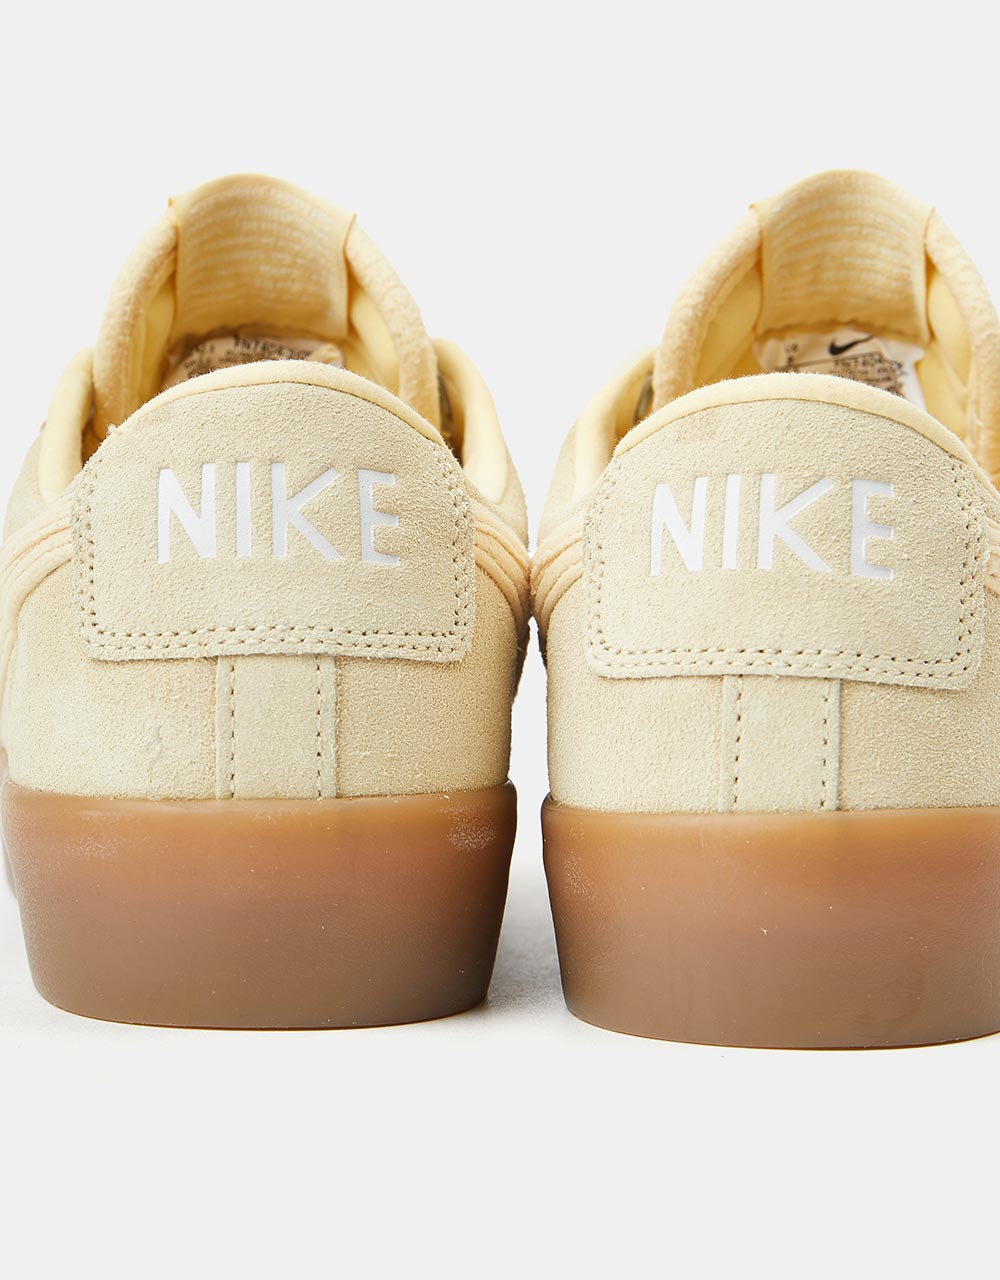 Nike SB Blazer Low Pro GT Premium Skate Shoes - Pale Vanilla/Pale Vanilla-Pale Vanilla-Summit White-Gum Lt Brown